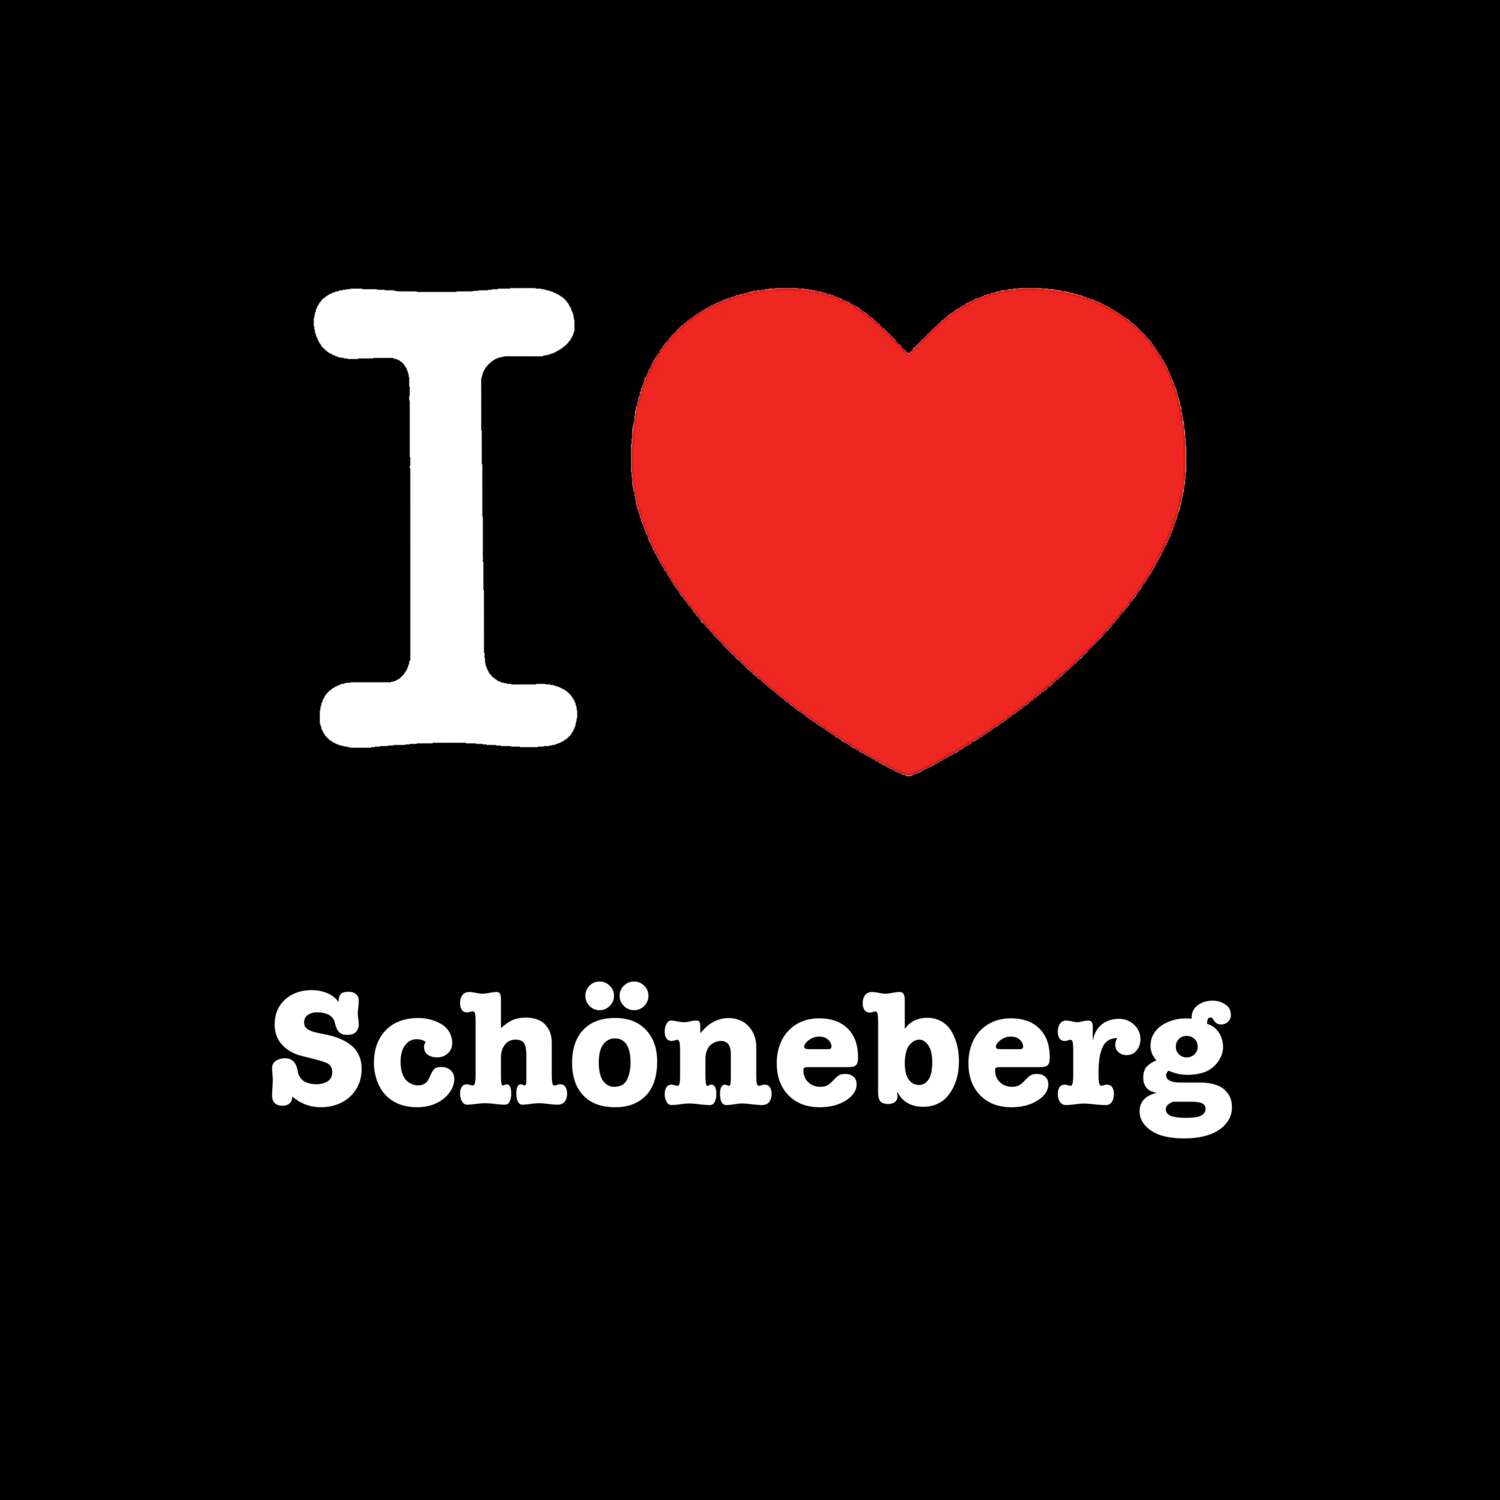 Schöneberg T-Shirt »I love«